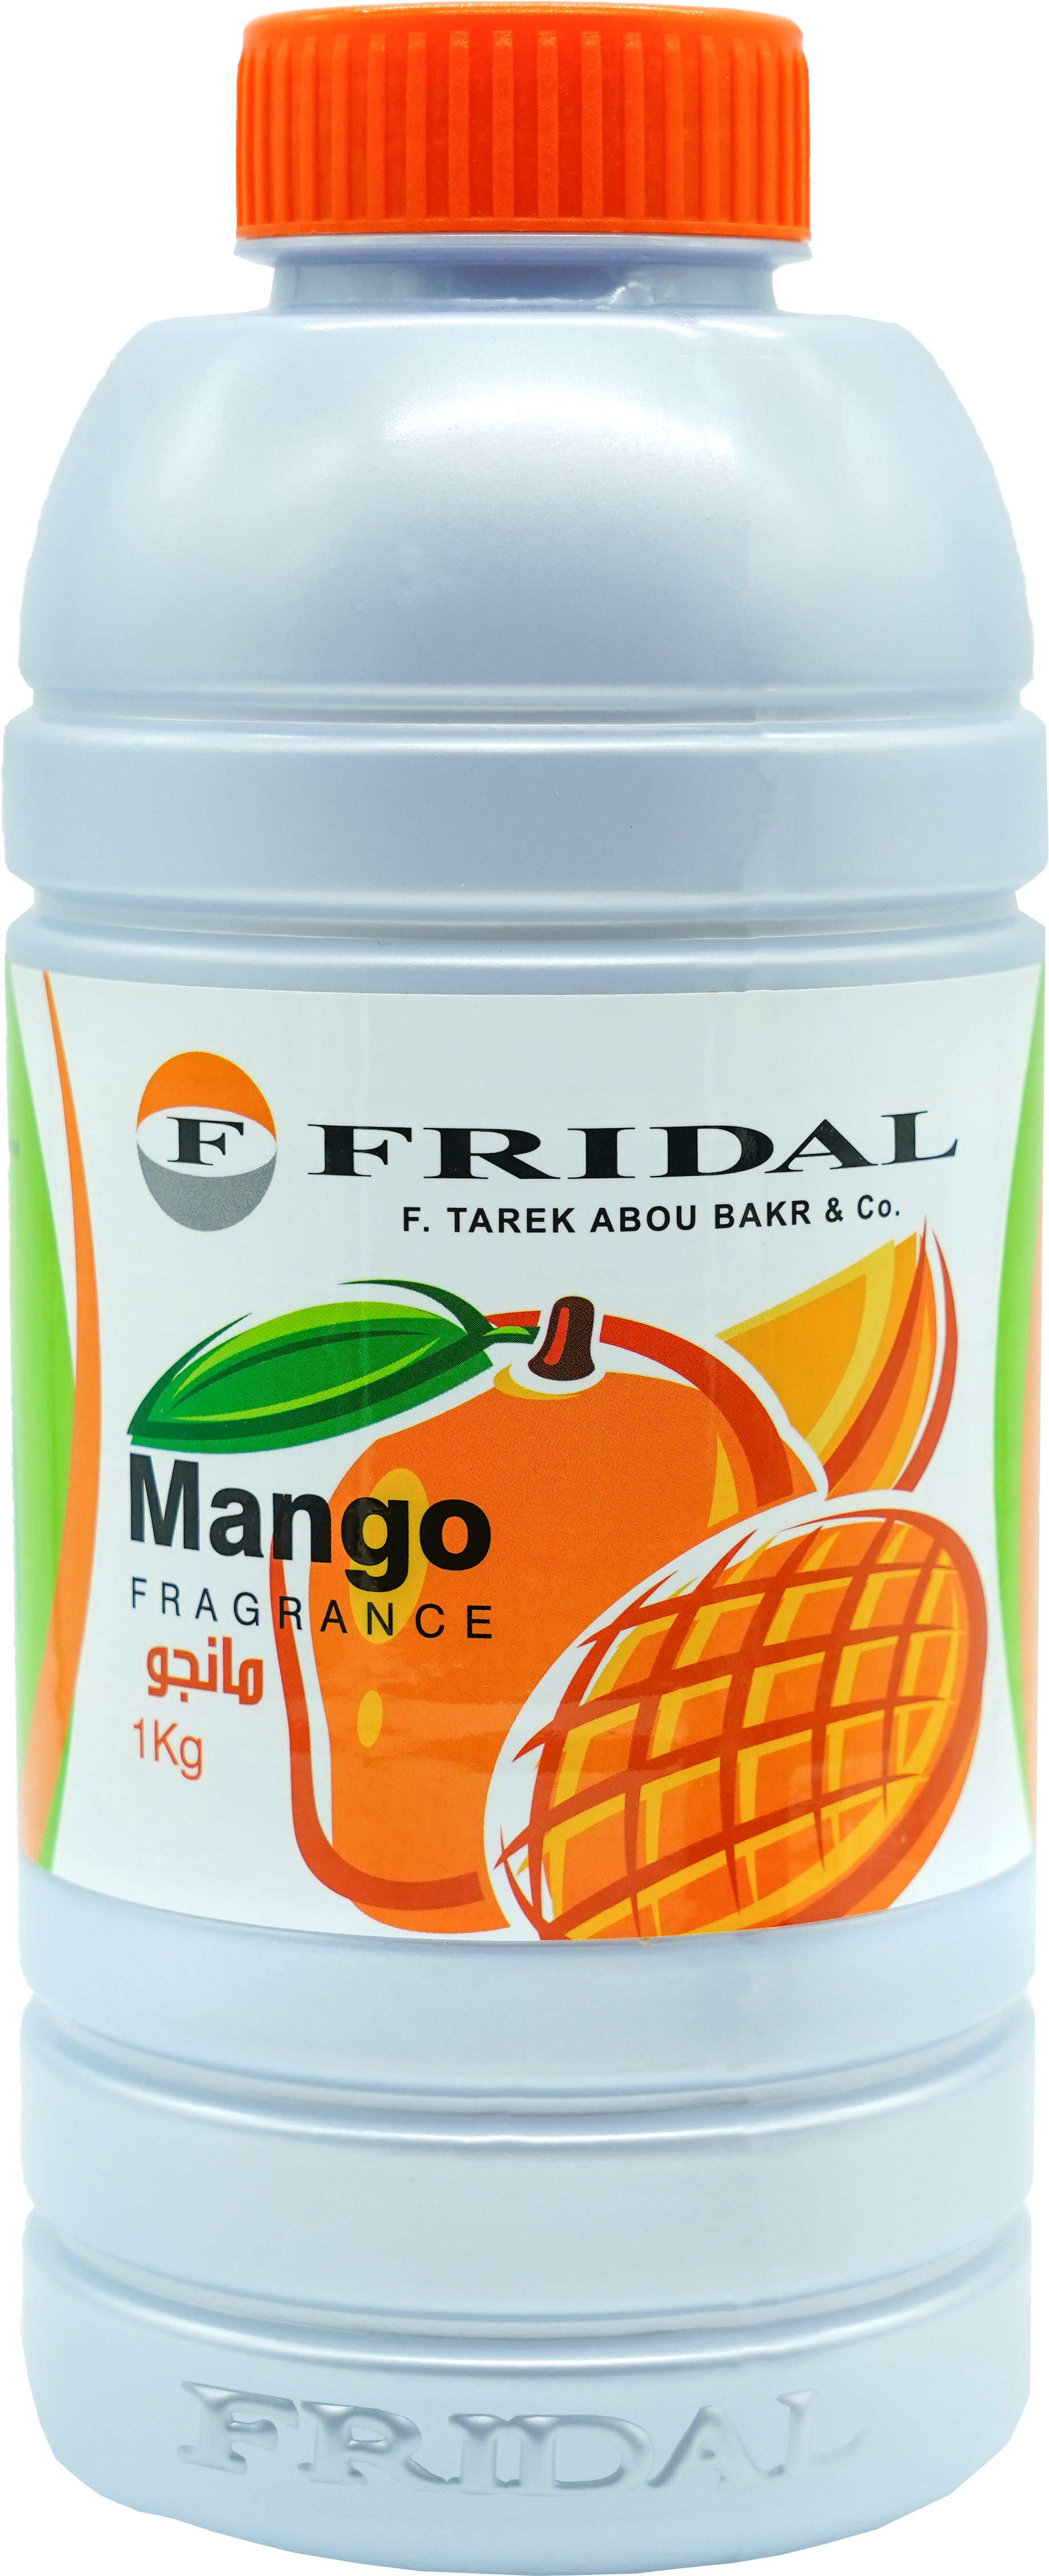 Multi-purpose usage Fragrance "Mango 1kg"